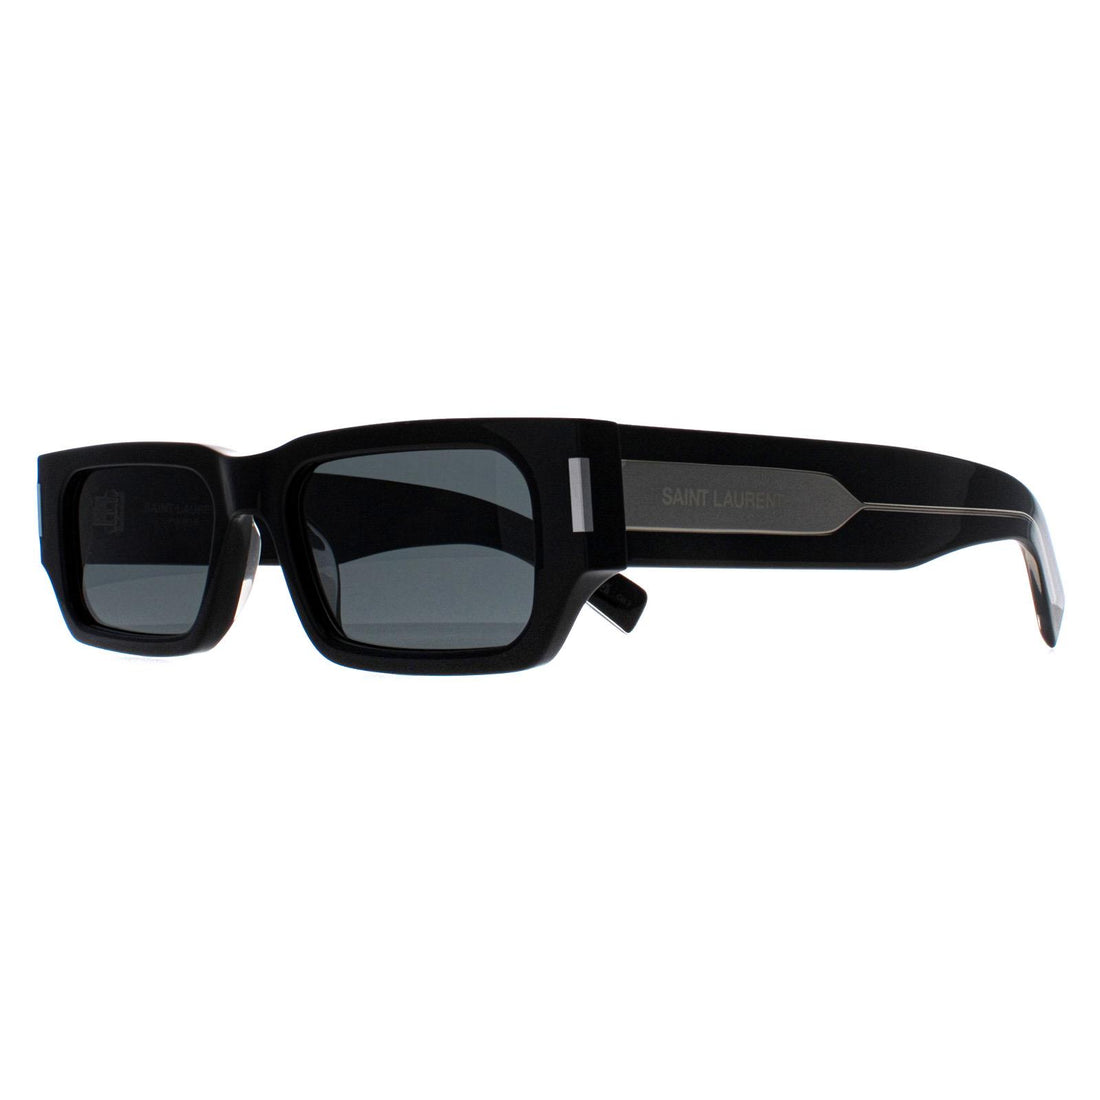 Saint Laurent Sunglasses SL660 001 Black Grey